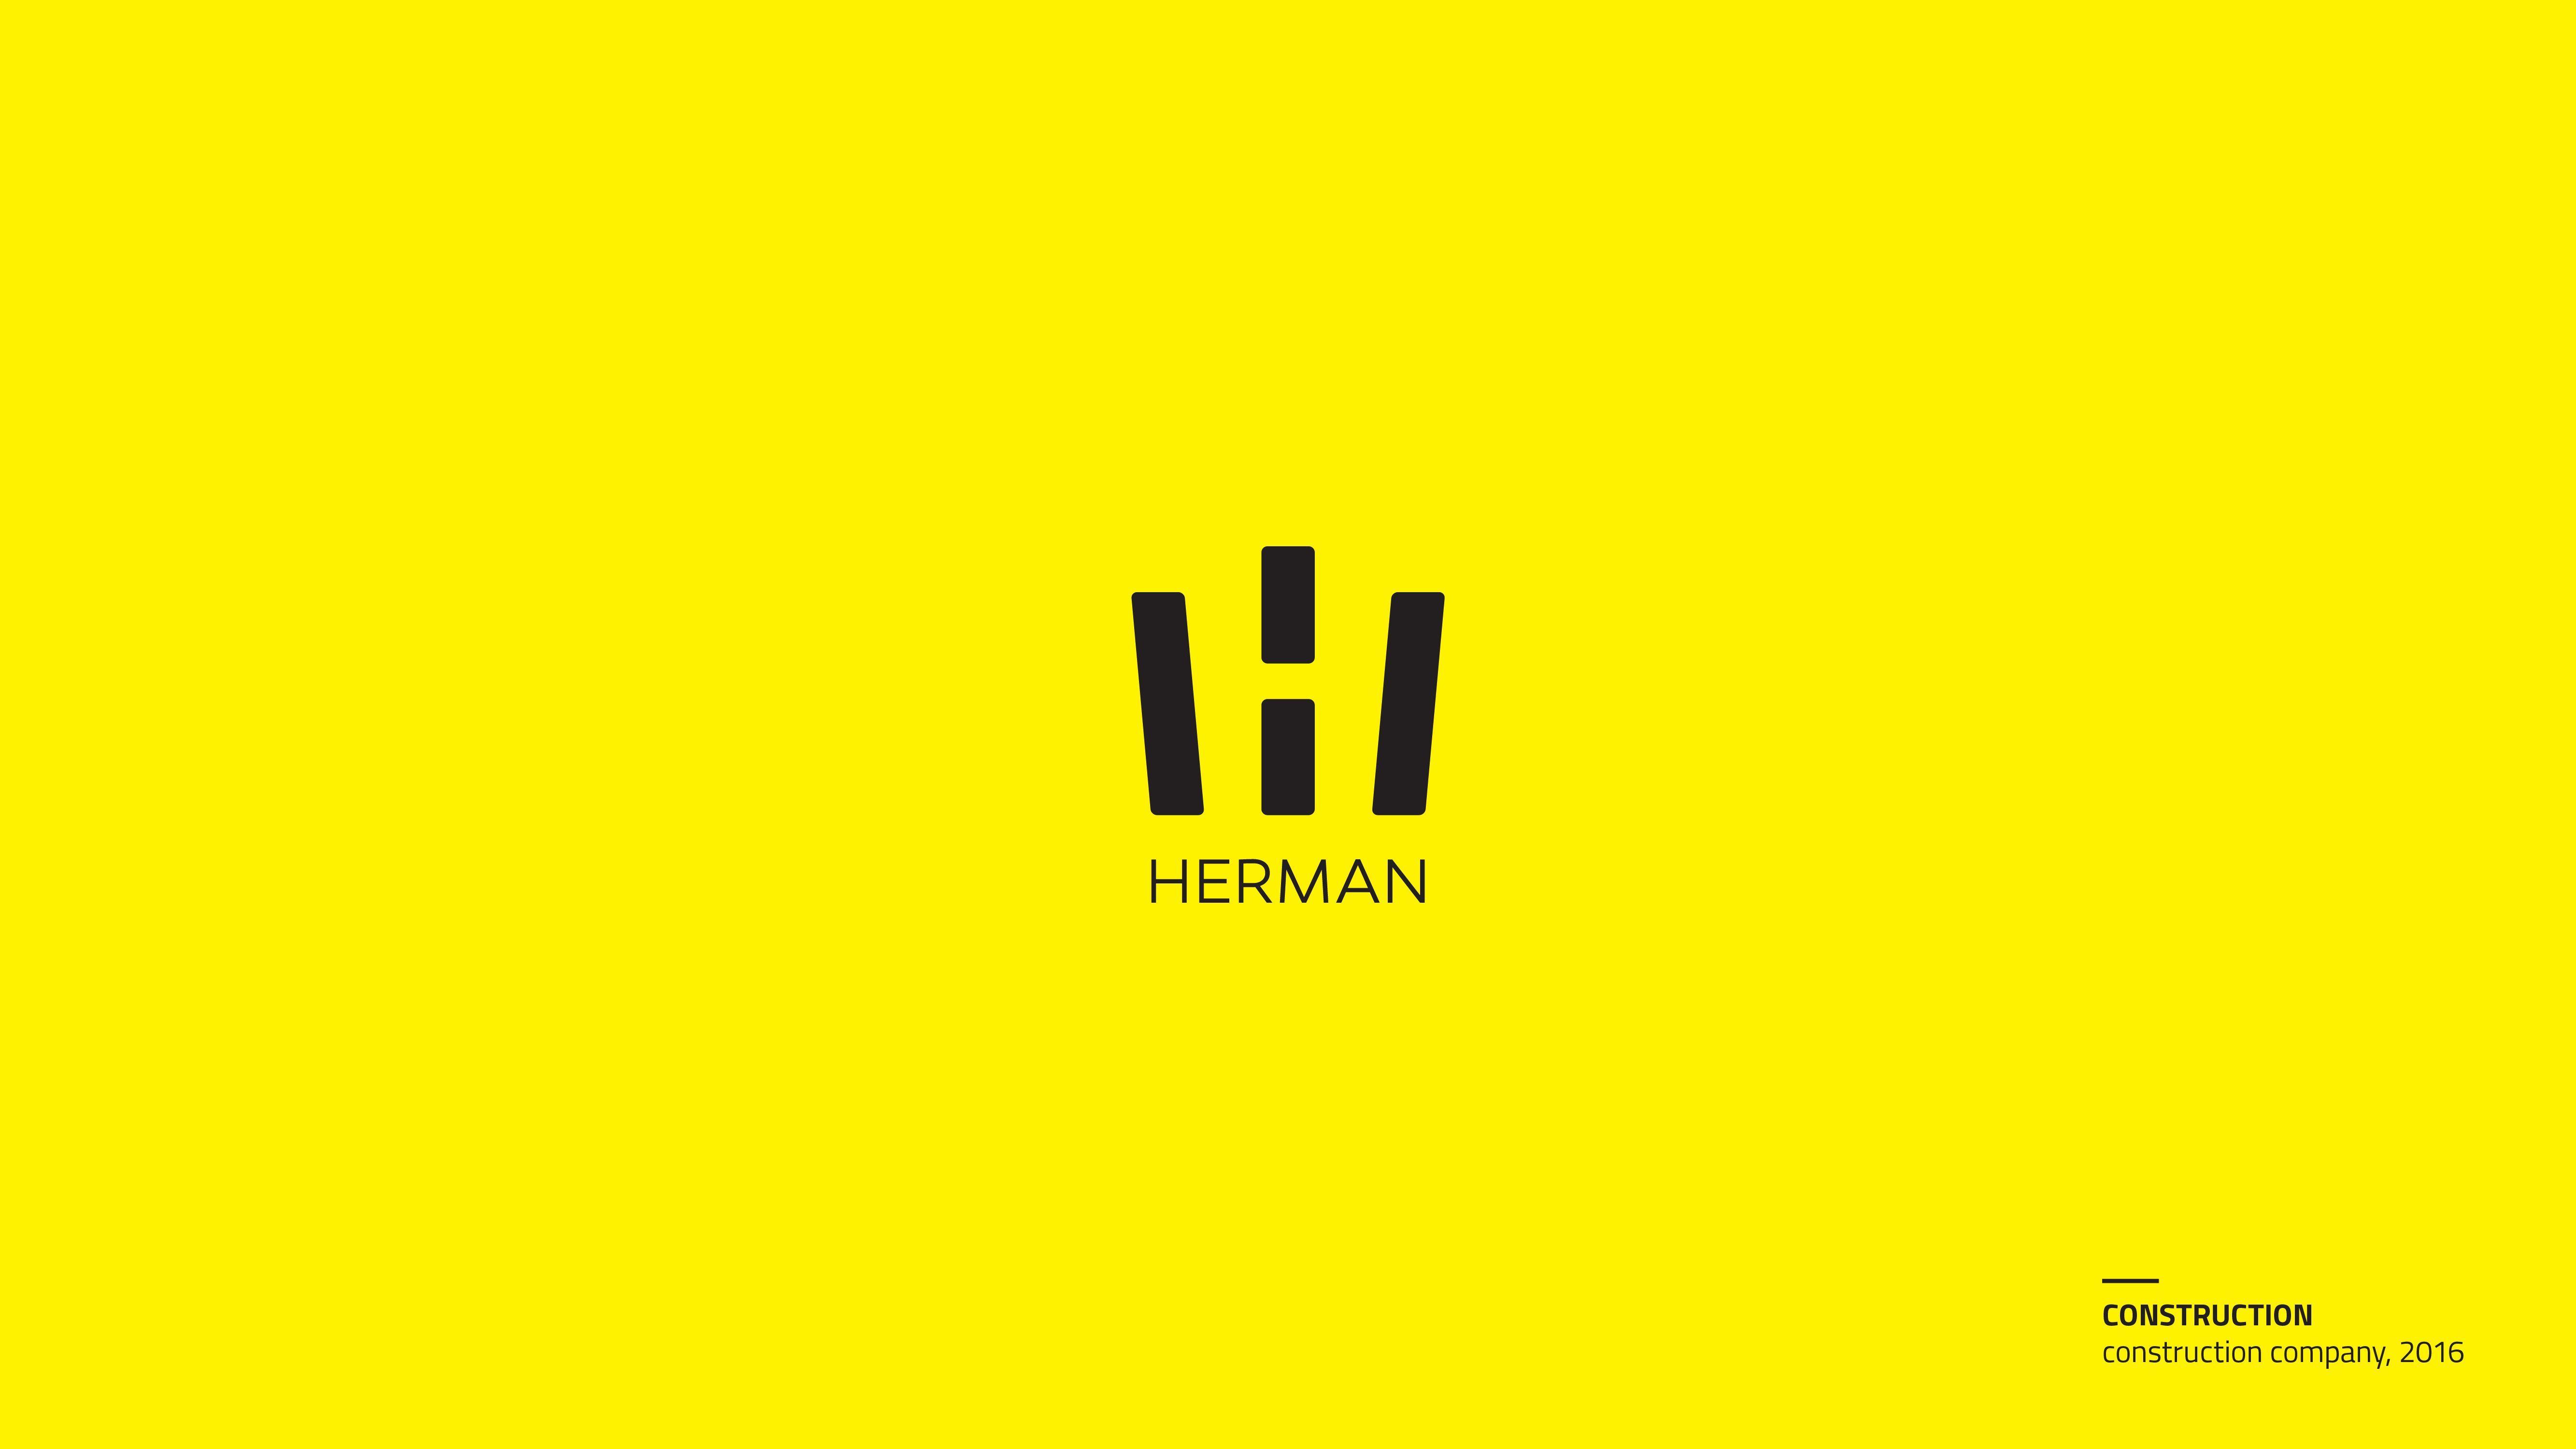 Attila Logo - Herman logo #logo #logodesign #attilahadnagy | Logo Design by Attila ...